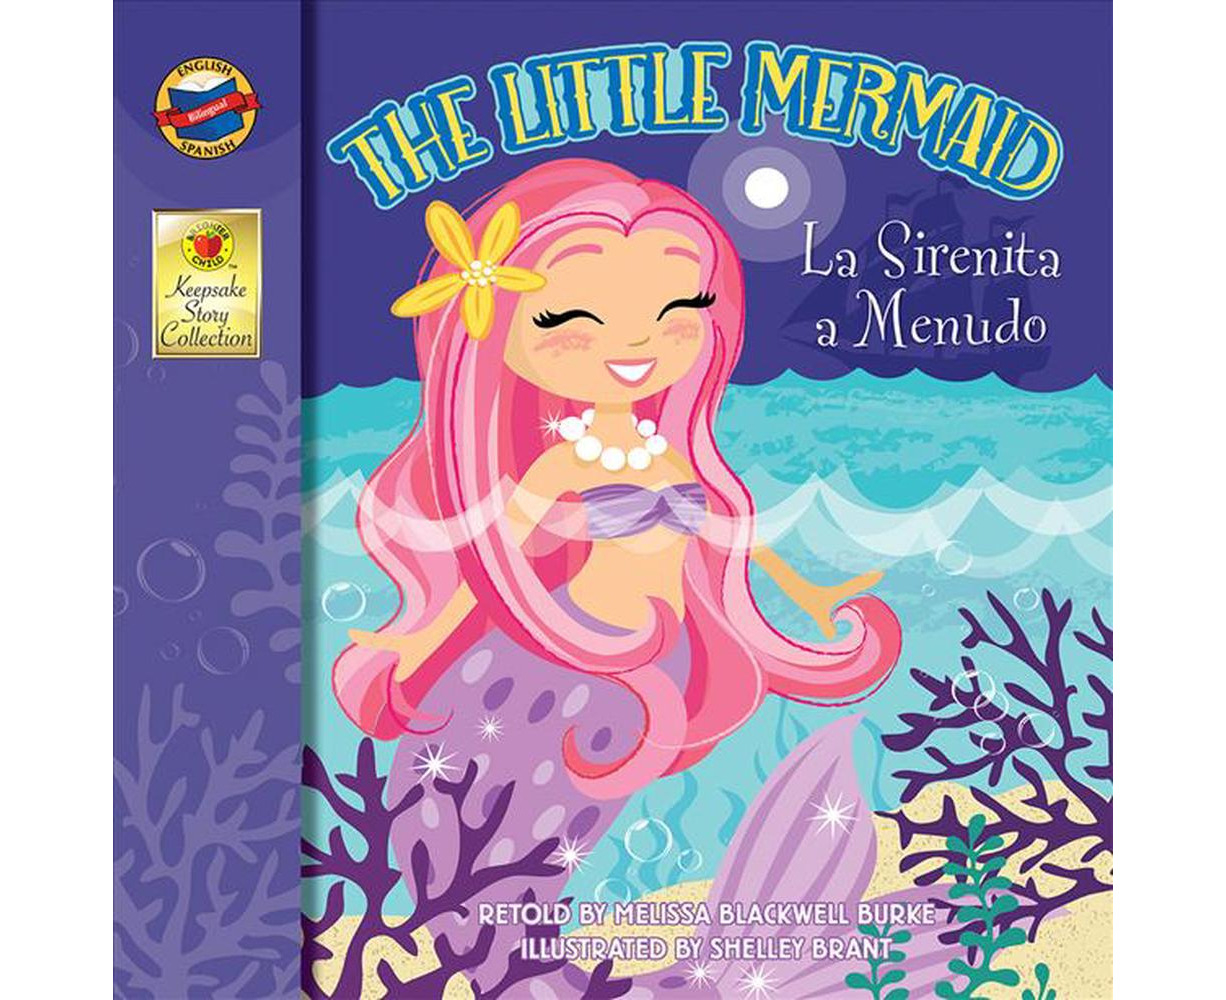 The Keepsake Stories Little Mermaid: La Sirenita a Menudo 